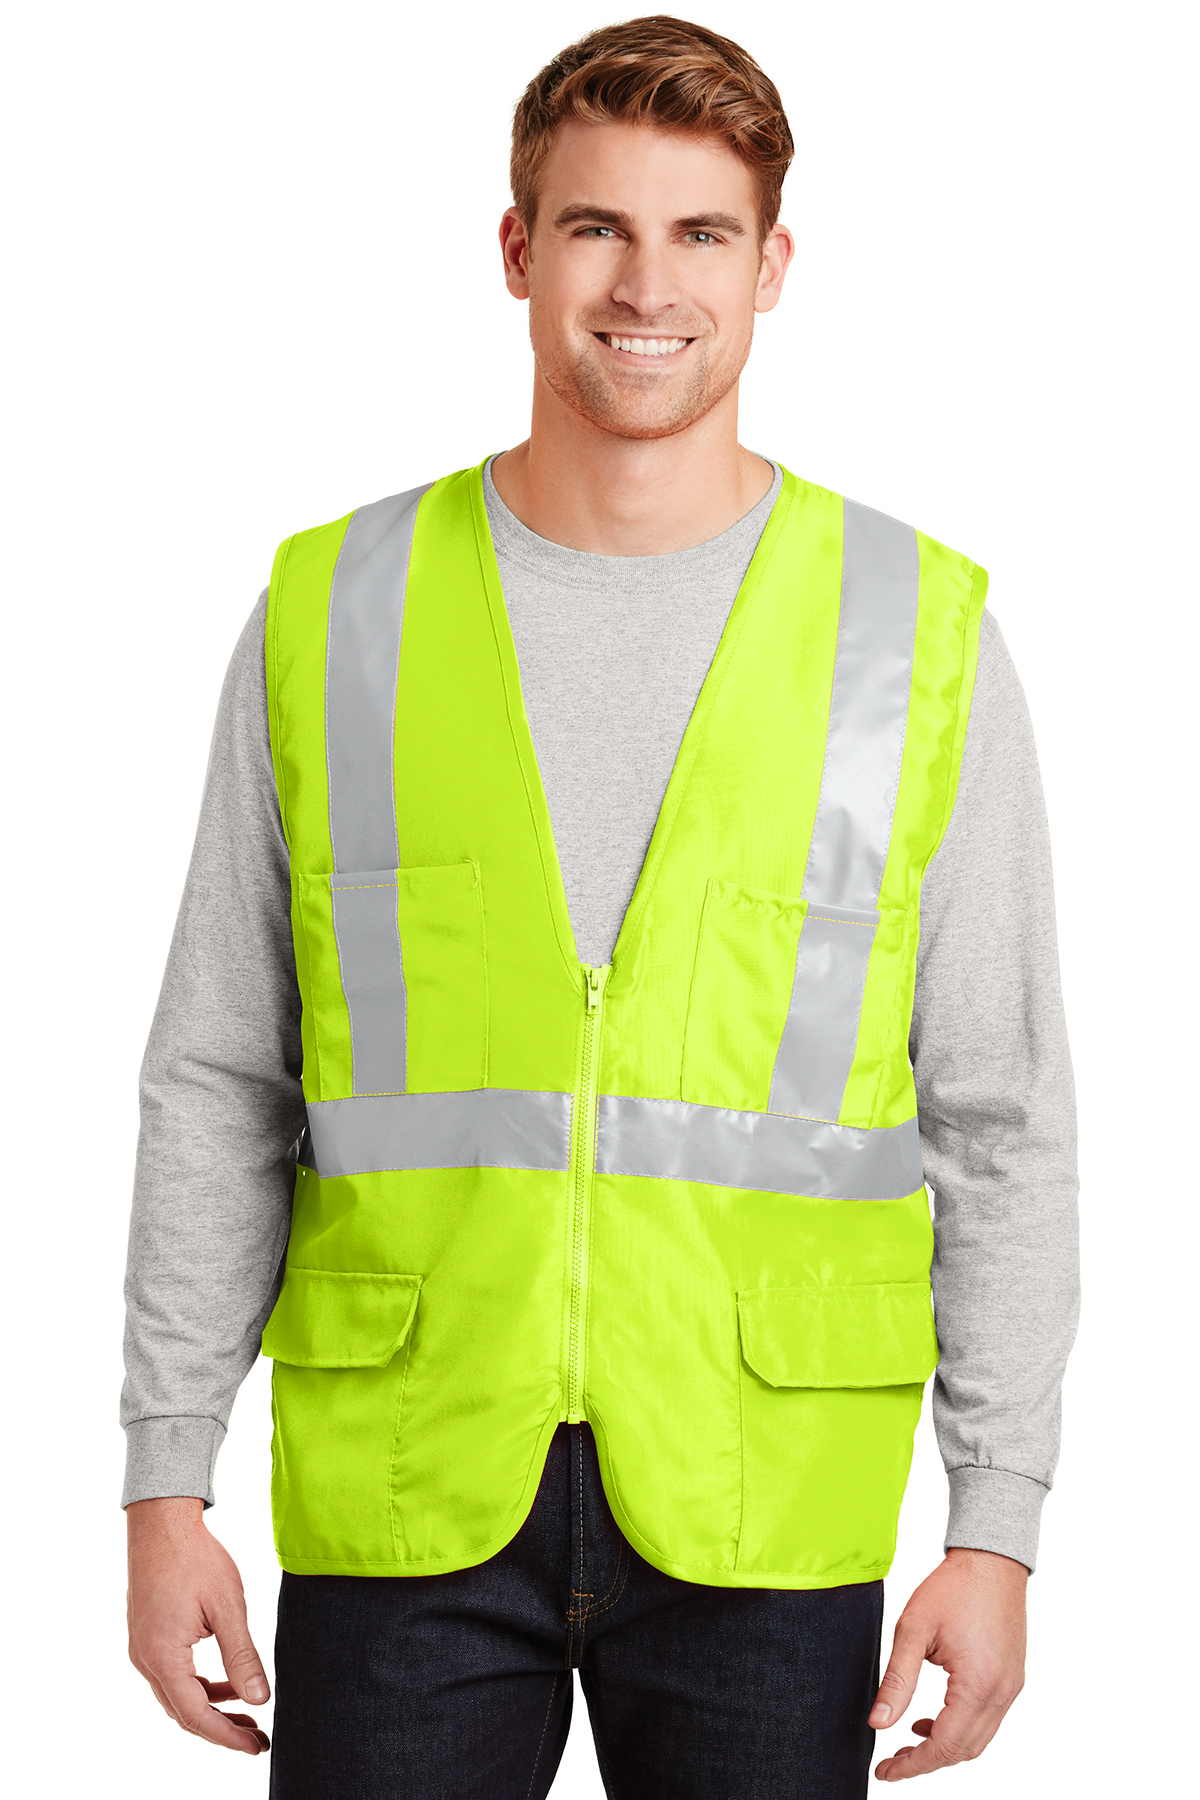 ANSI 107 Class 2 Mesh Back Safety Vest, Product